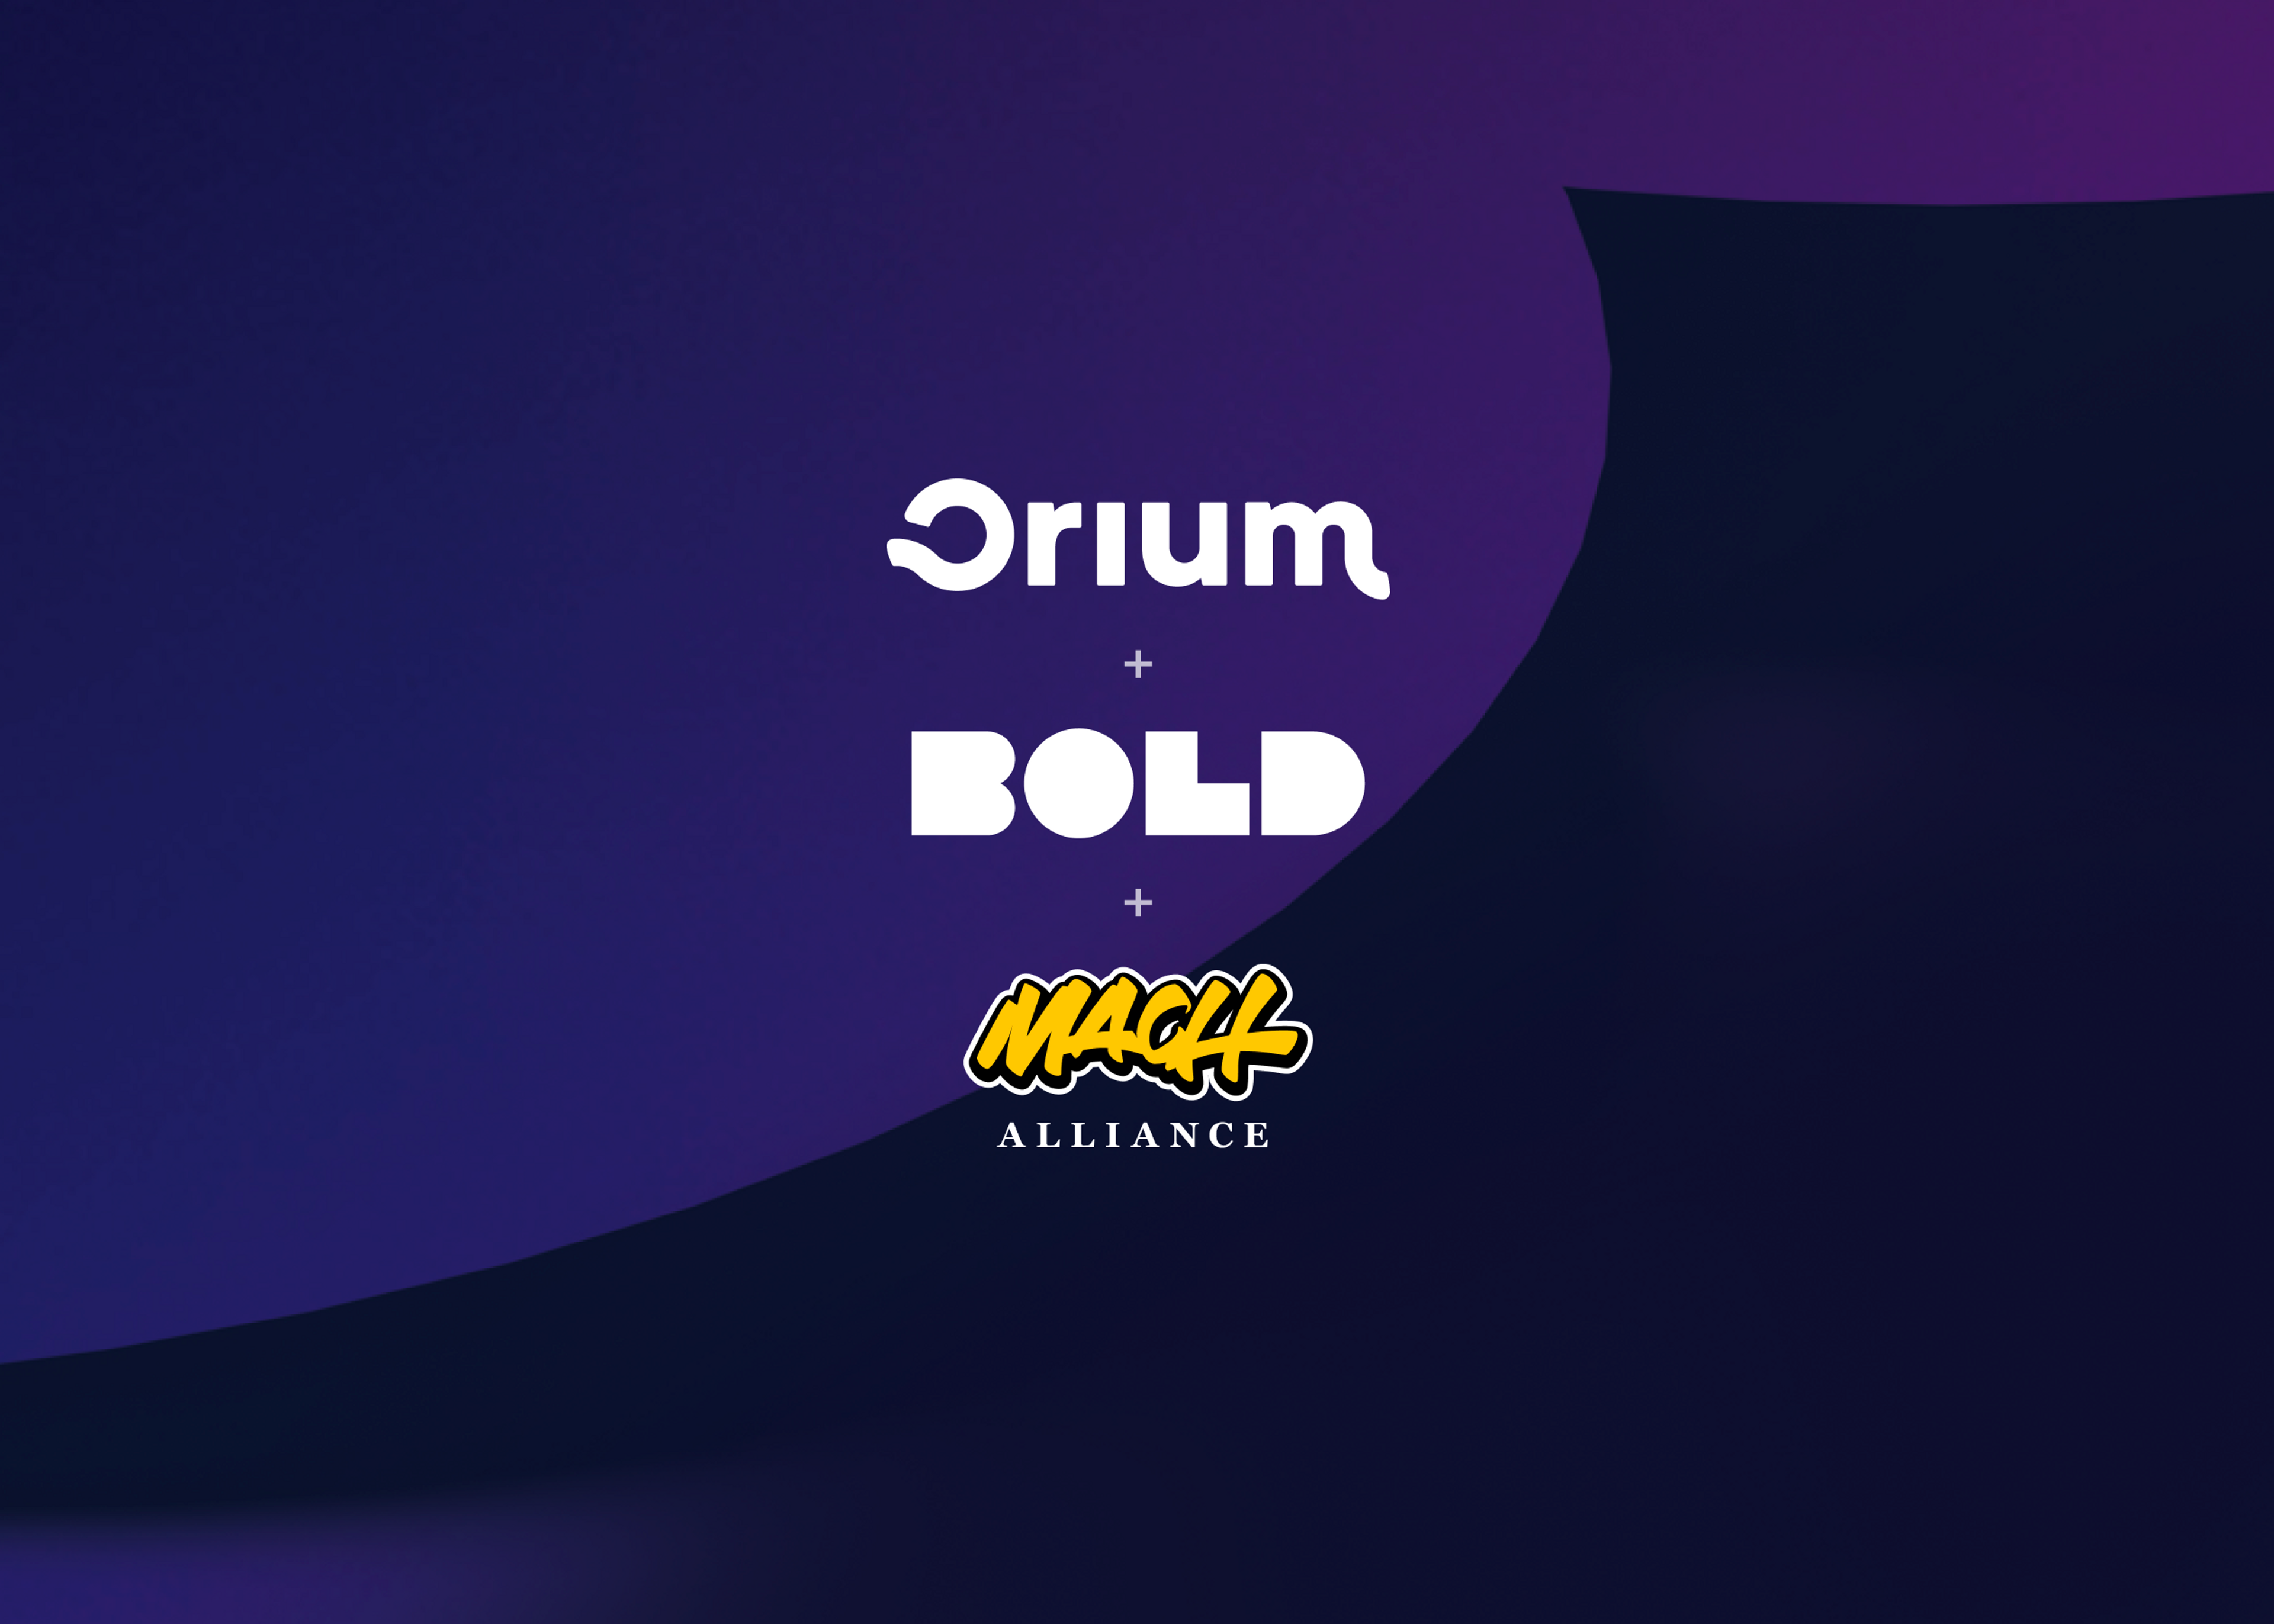 Orium + Bold + MACH Alliance logos